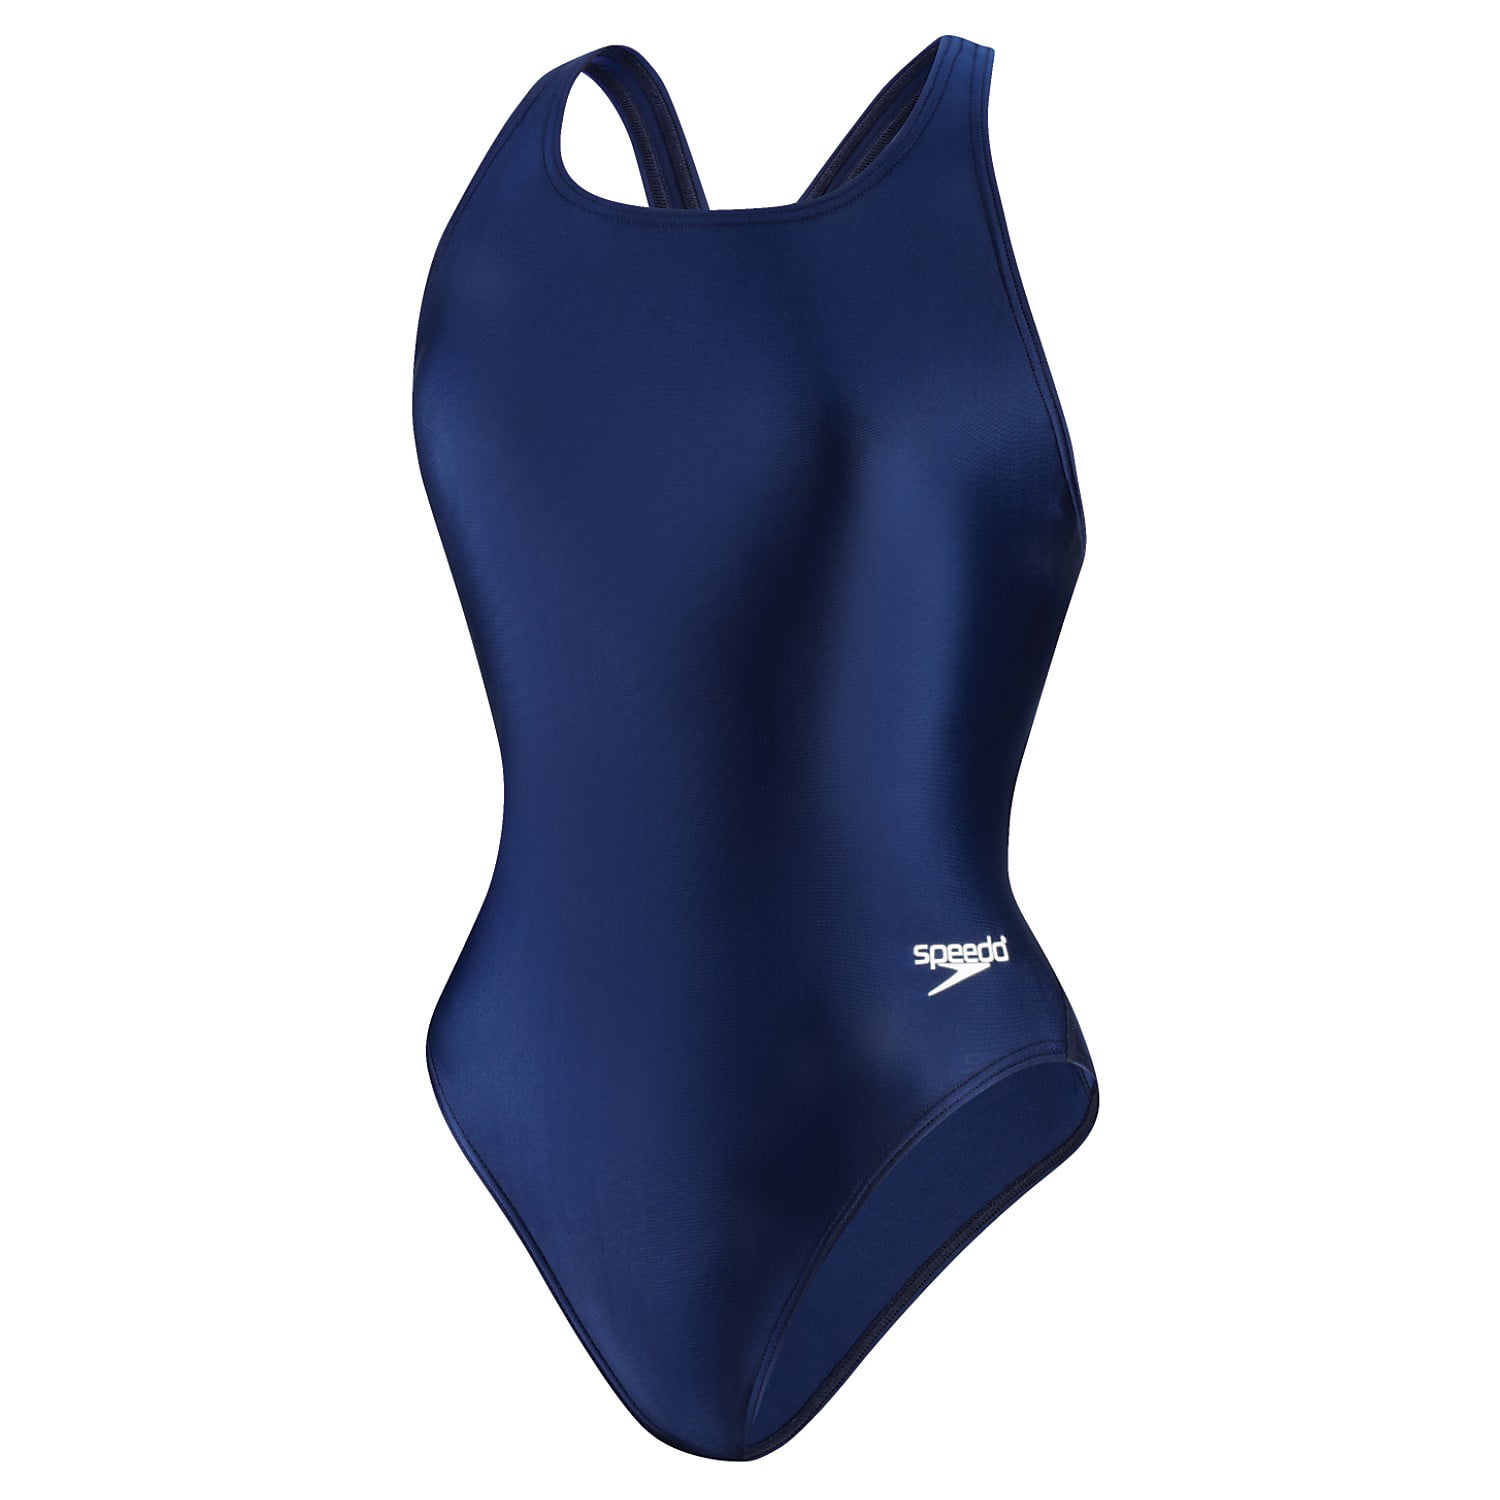 Details about   Speedo Women's Pro LT Super Pro Swimsuit Size 6/32-0F_09 Blue 